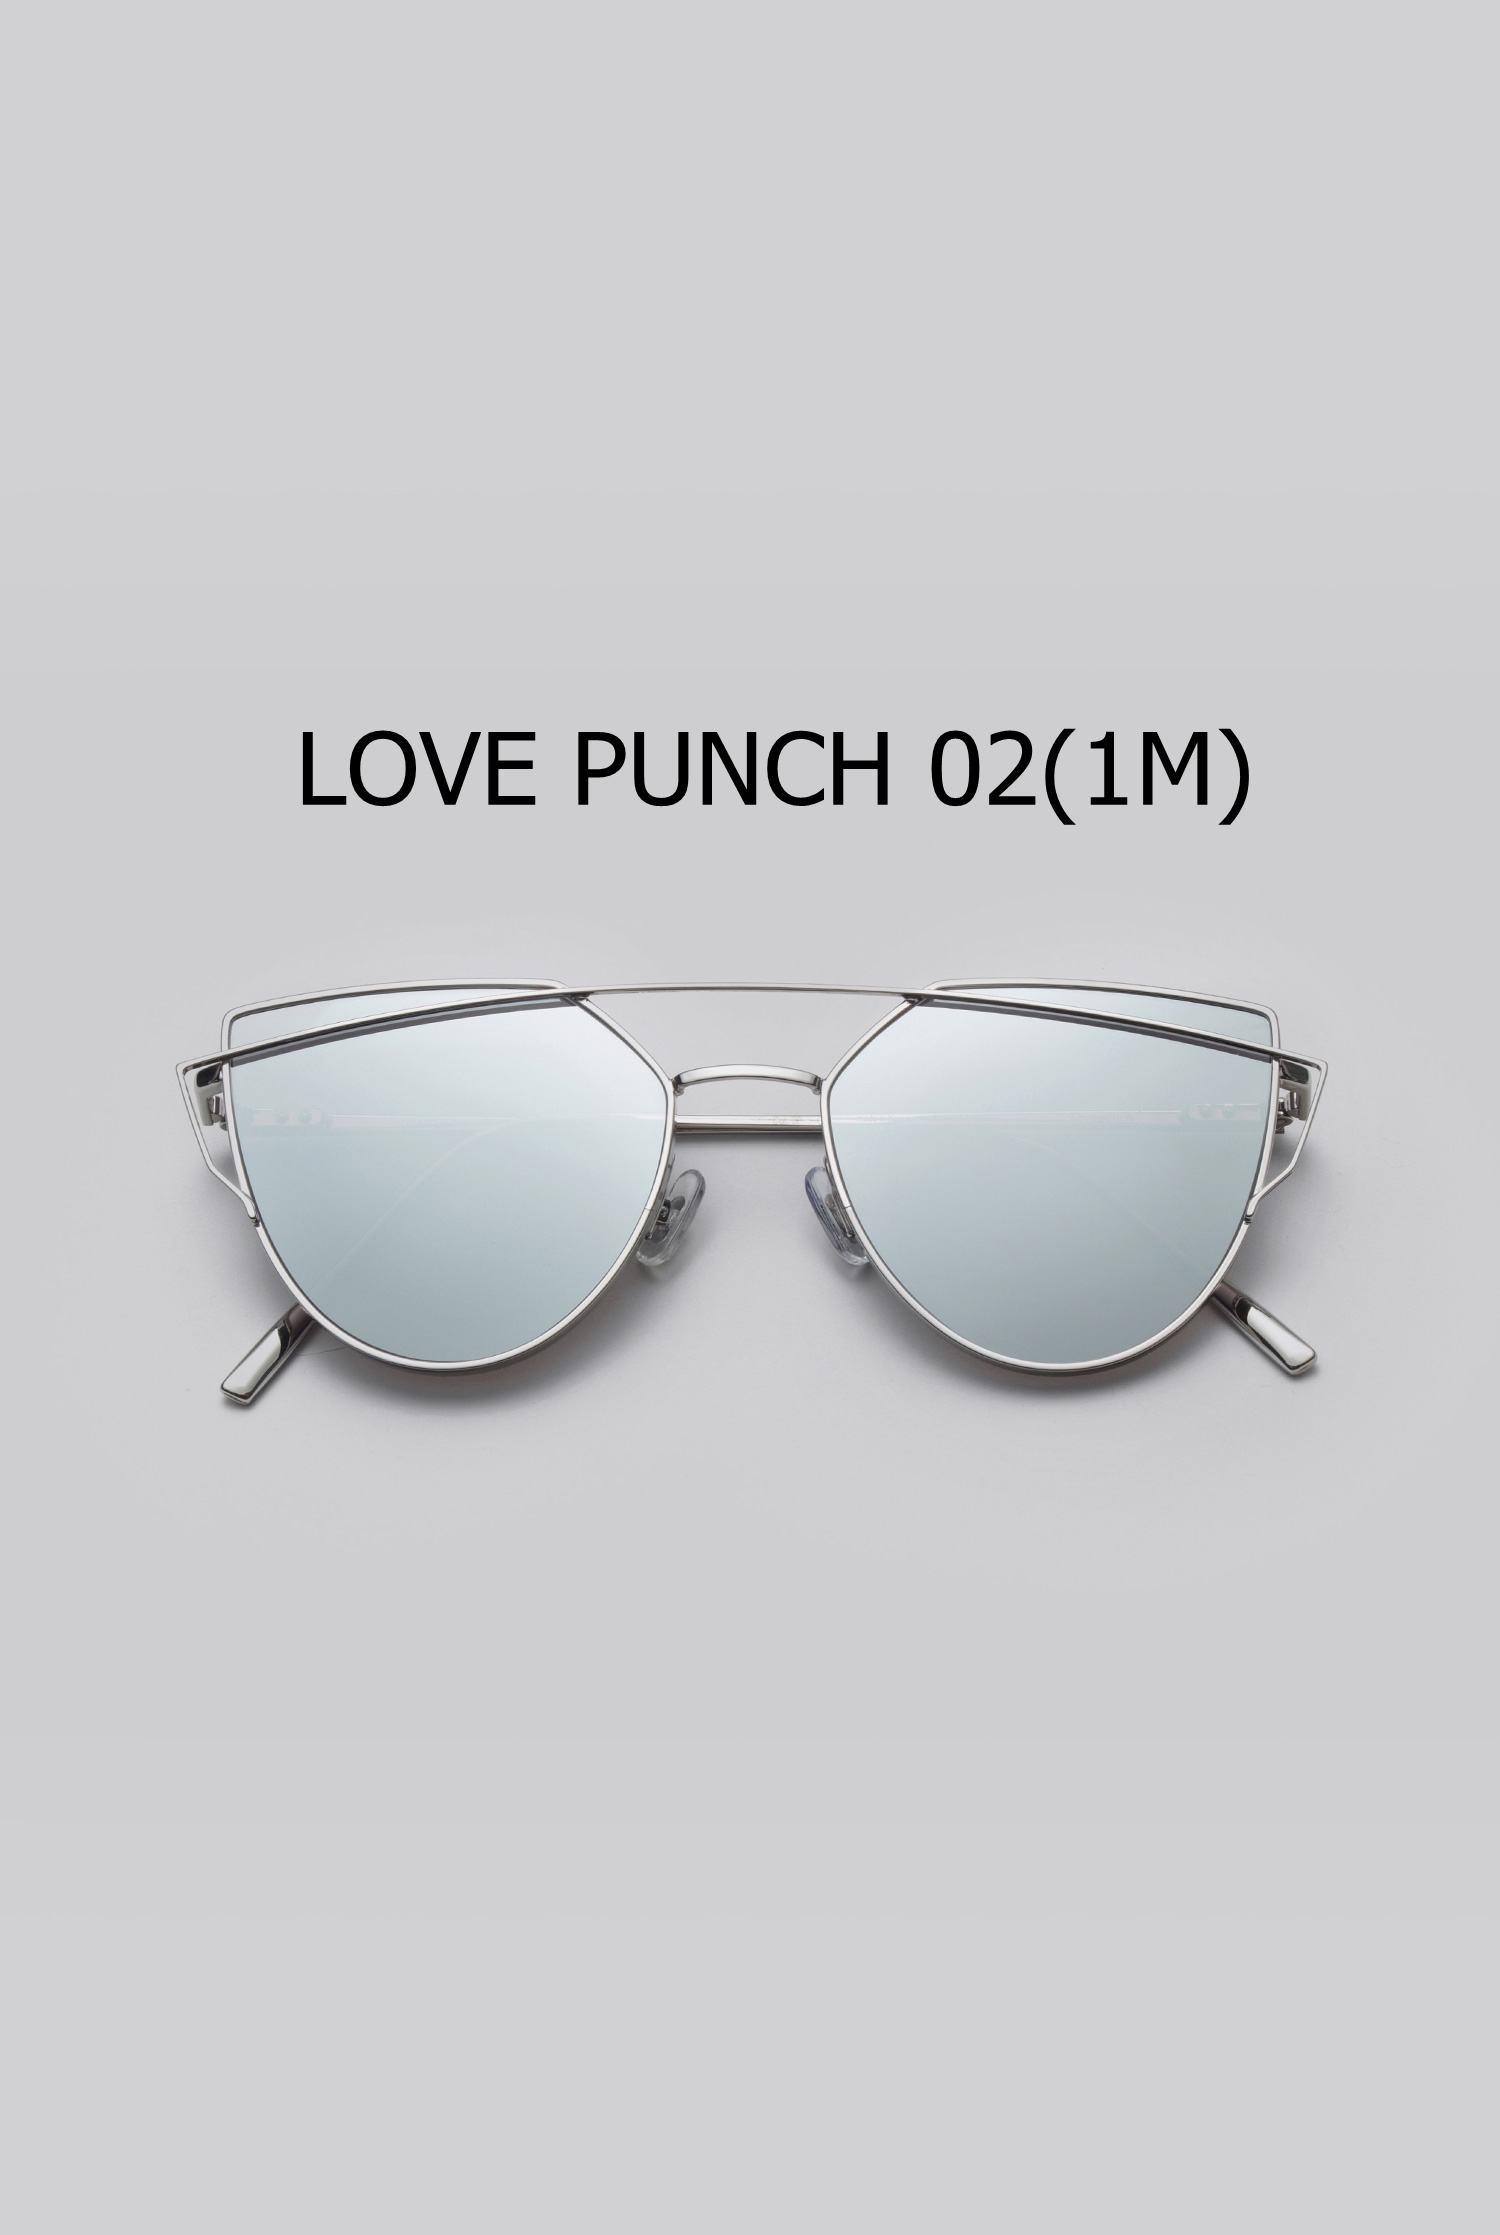 LOVE PUNCH 02(1M) 